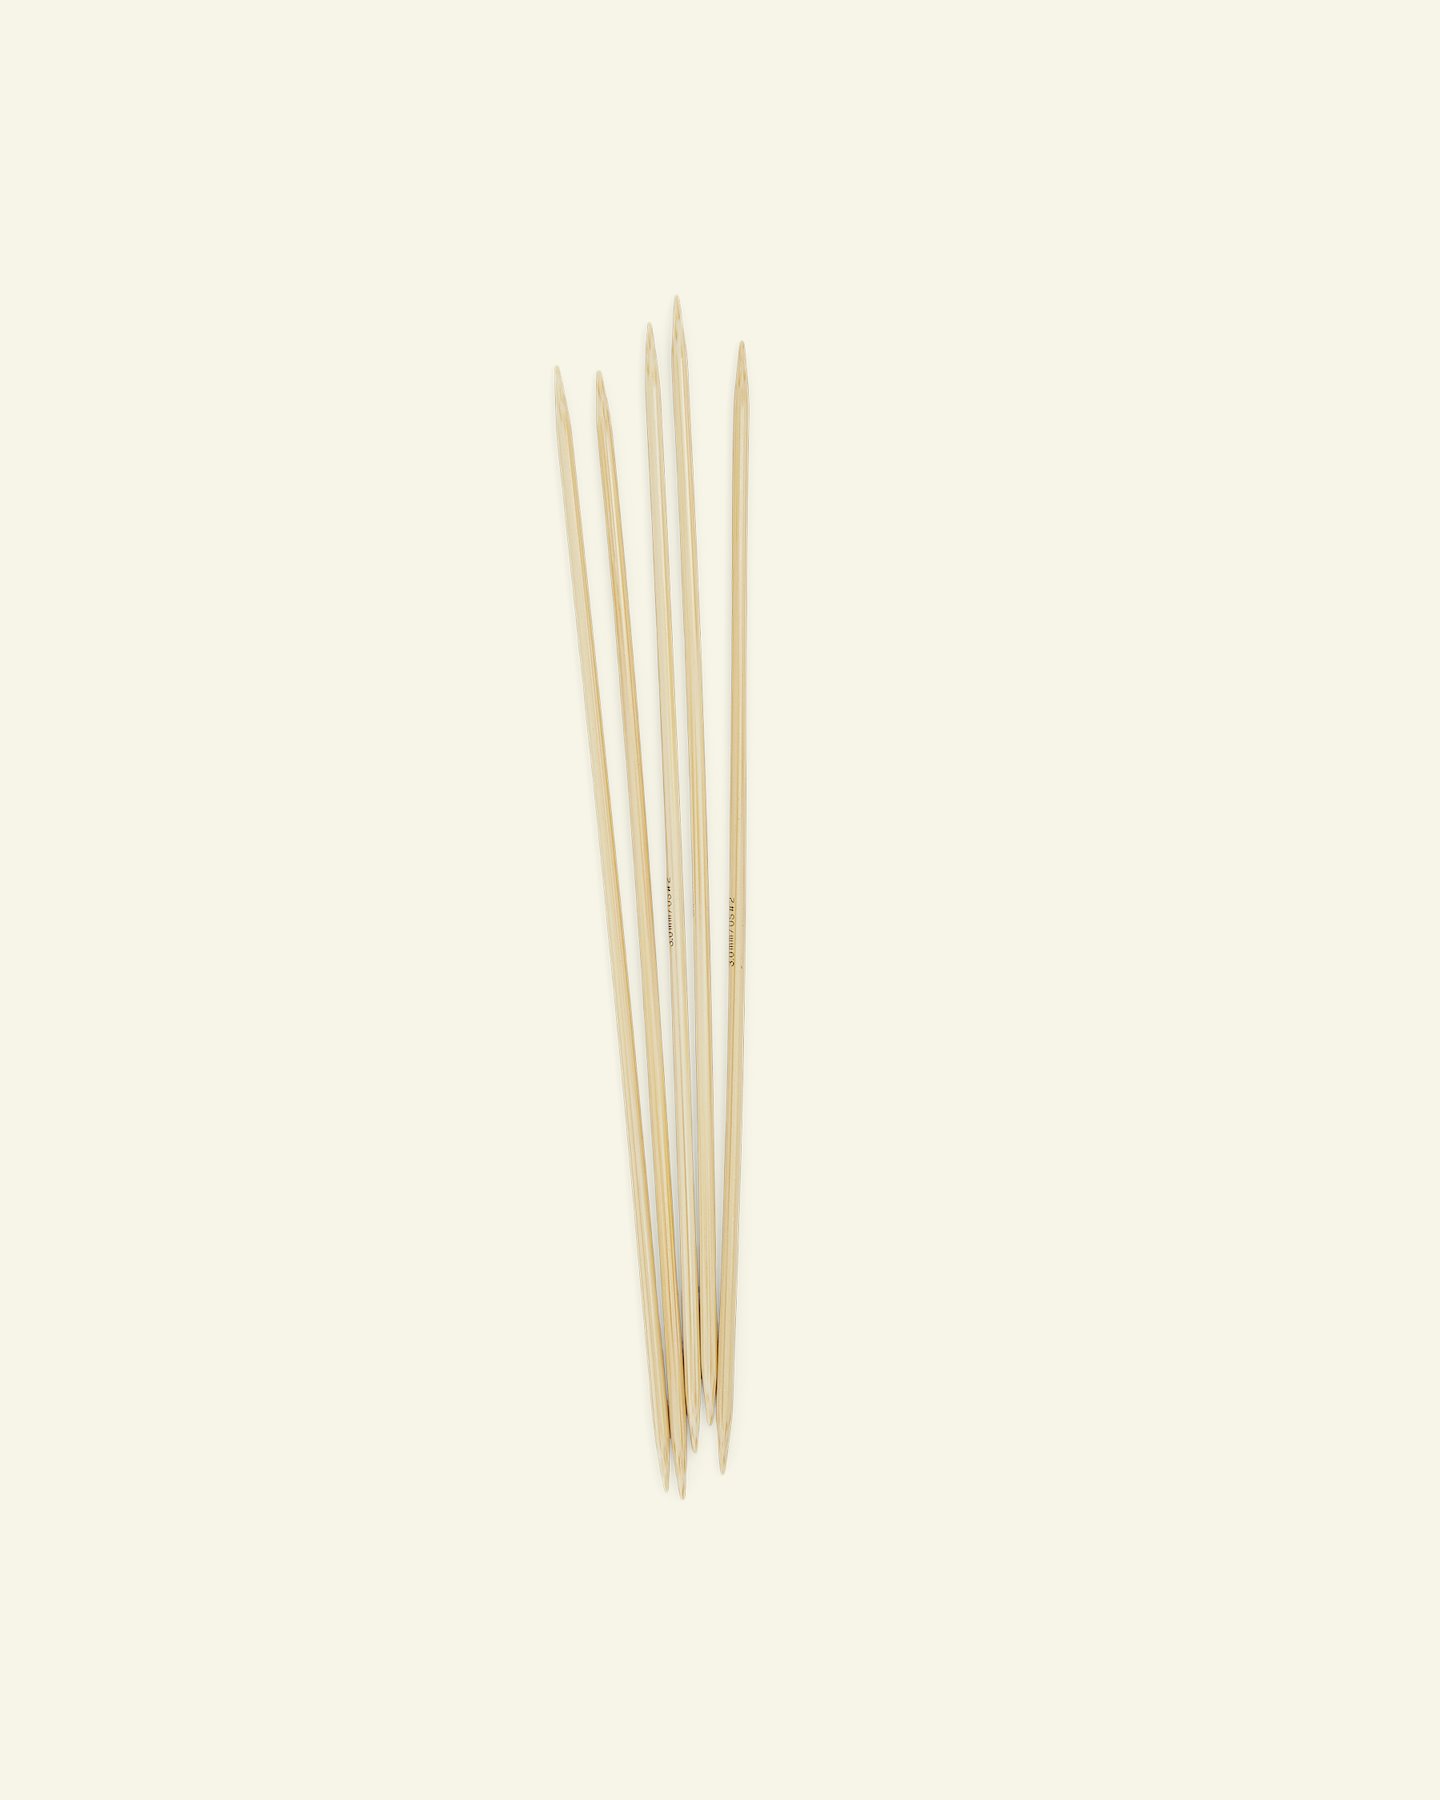 Addi strømpepinde bambus 20cm 3,0mm 83274_pack